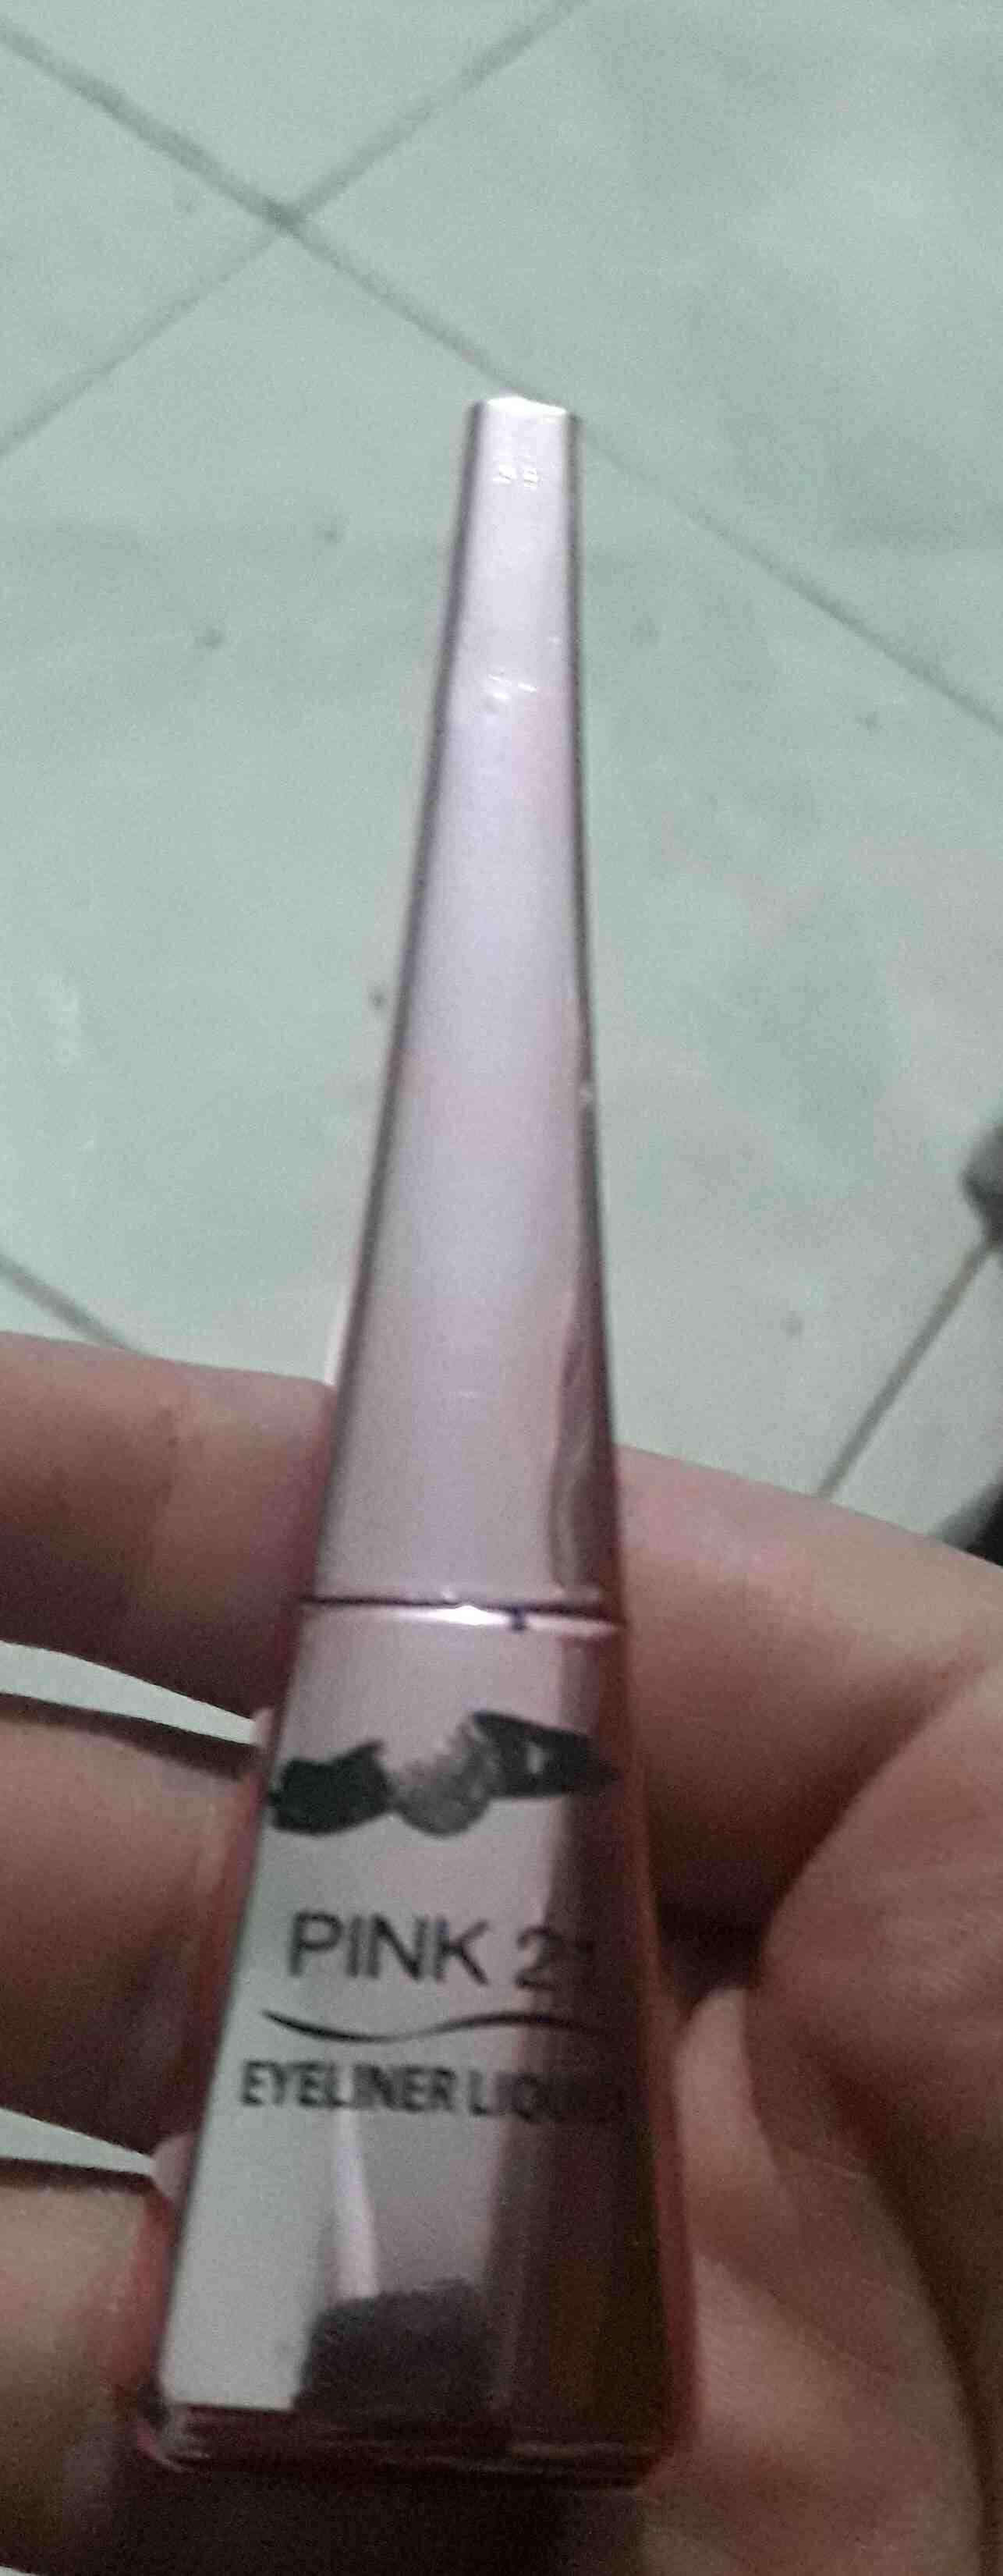 pink 21 eyeliner liquid - Produkt - en